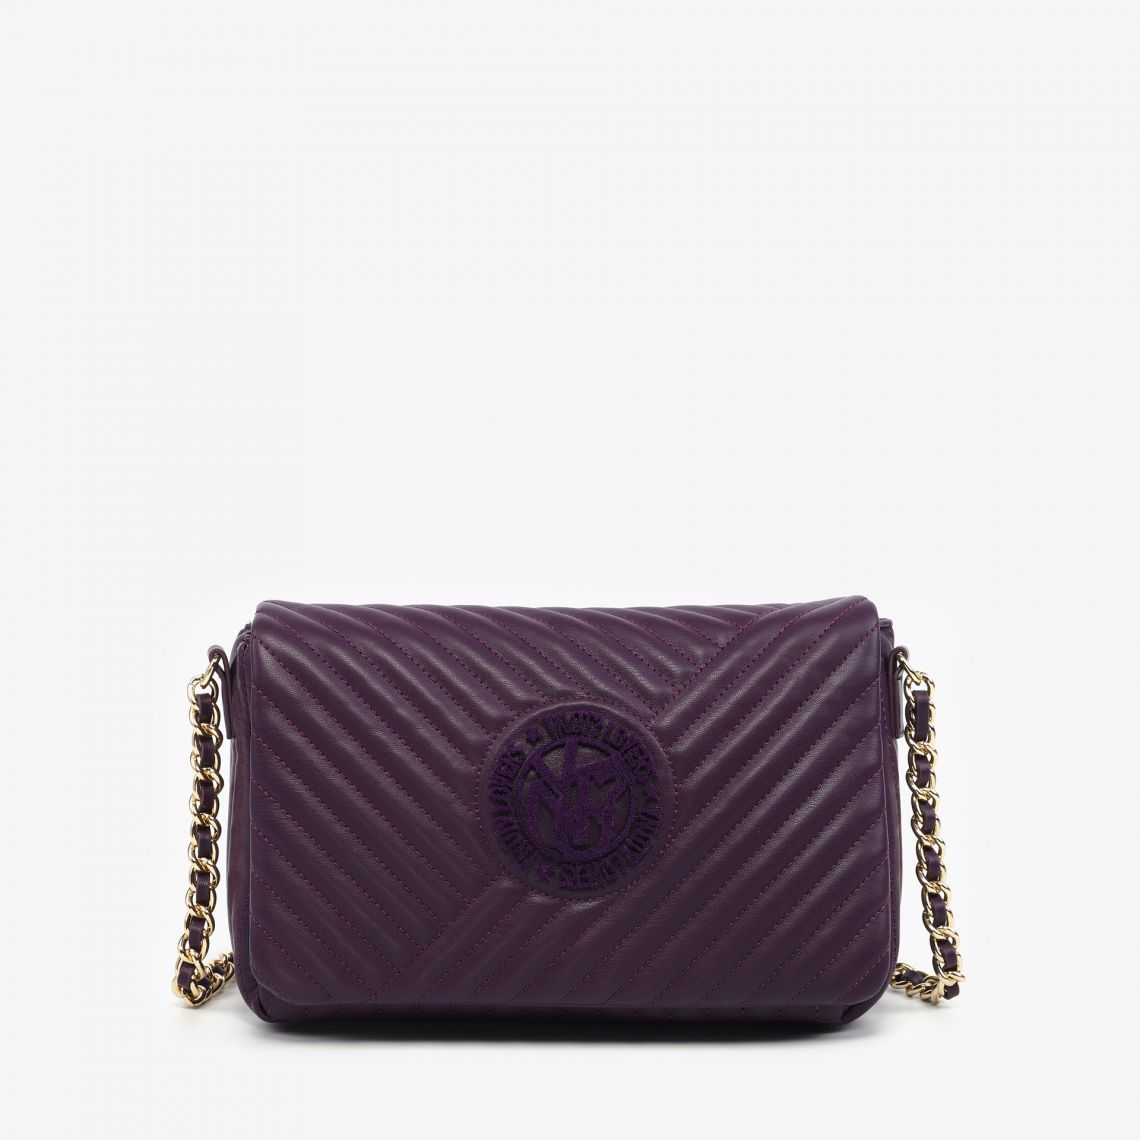 (image for) Scontate Pattina Purple outlet borse firmate